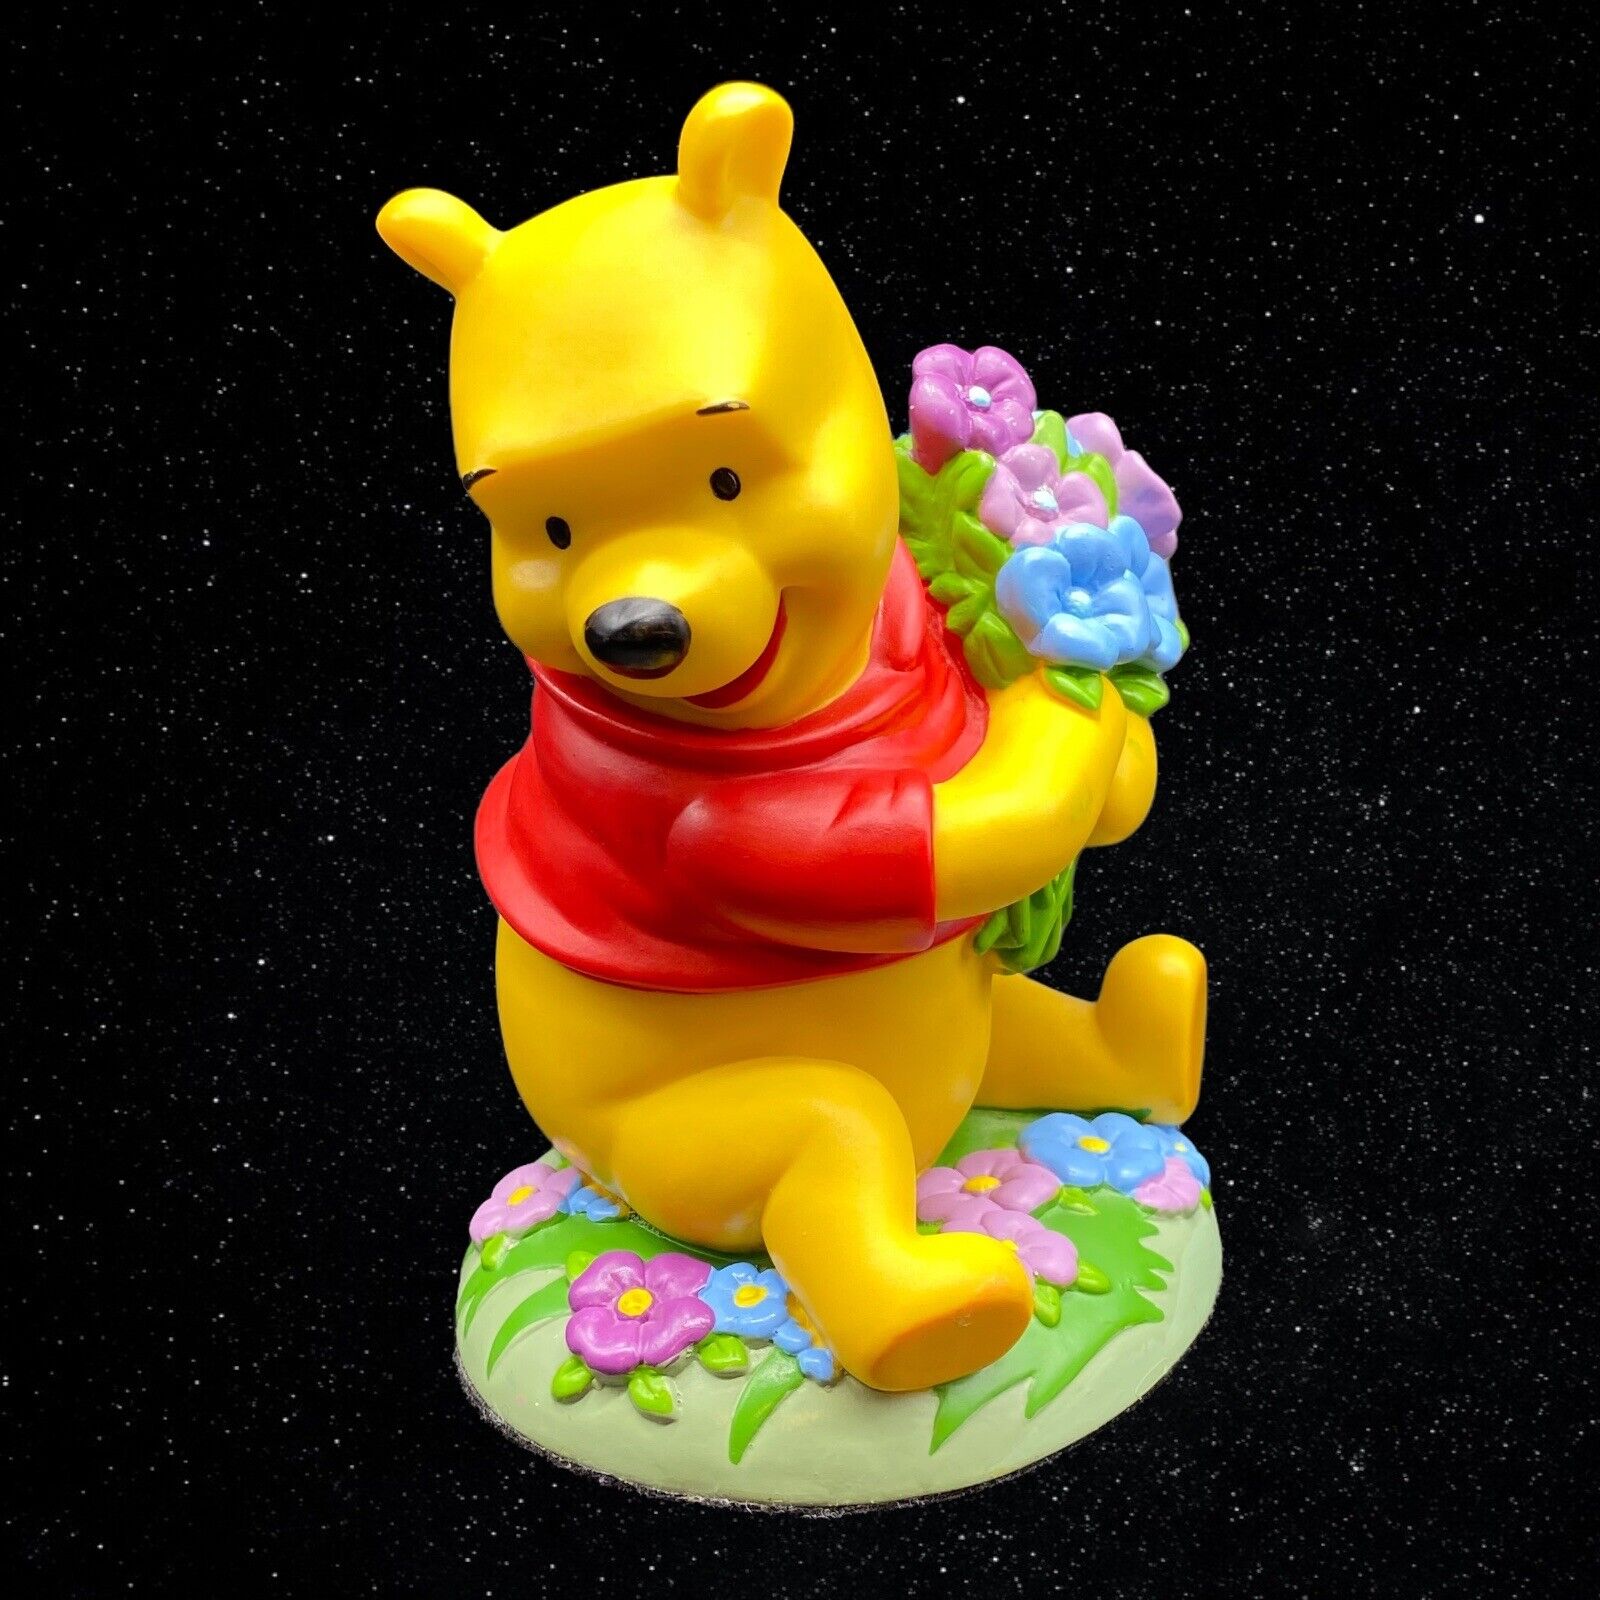 Disney Winnie The Pooh Holding Flower Bouquet Hard Plastic Figure 5.5”T 4”W